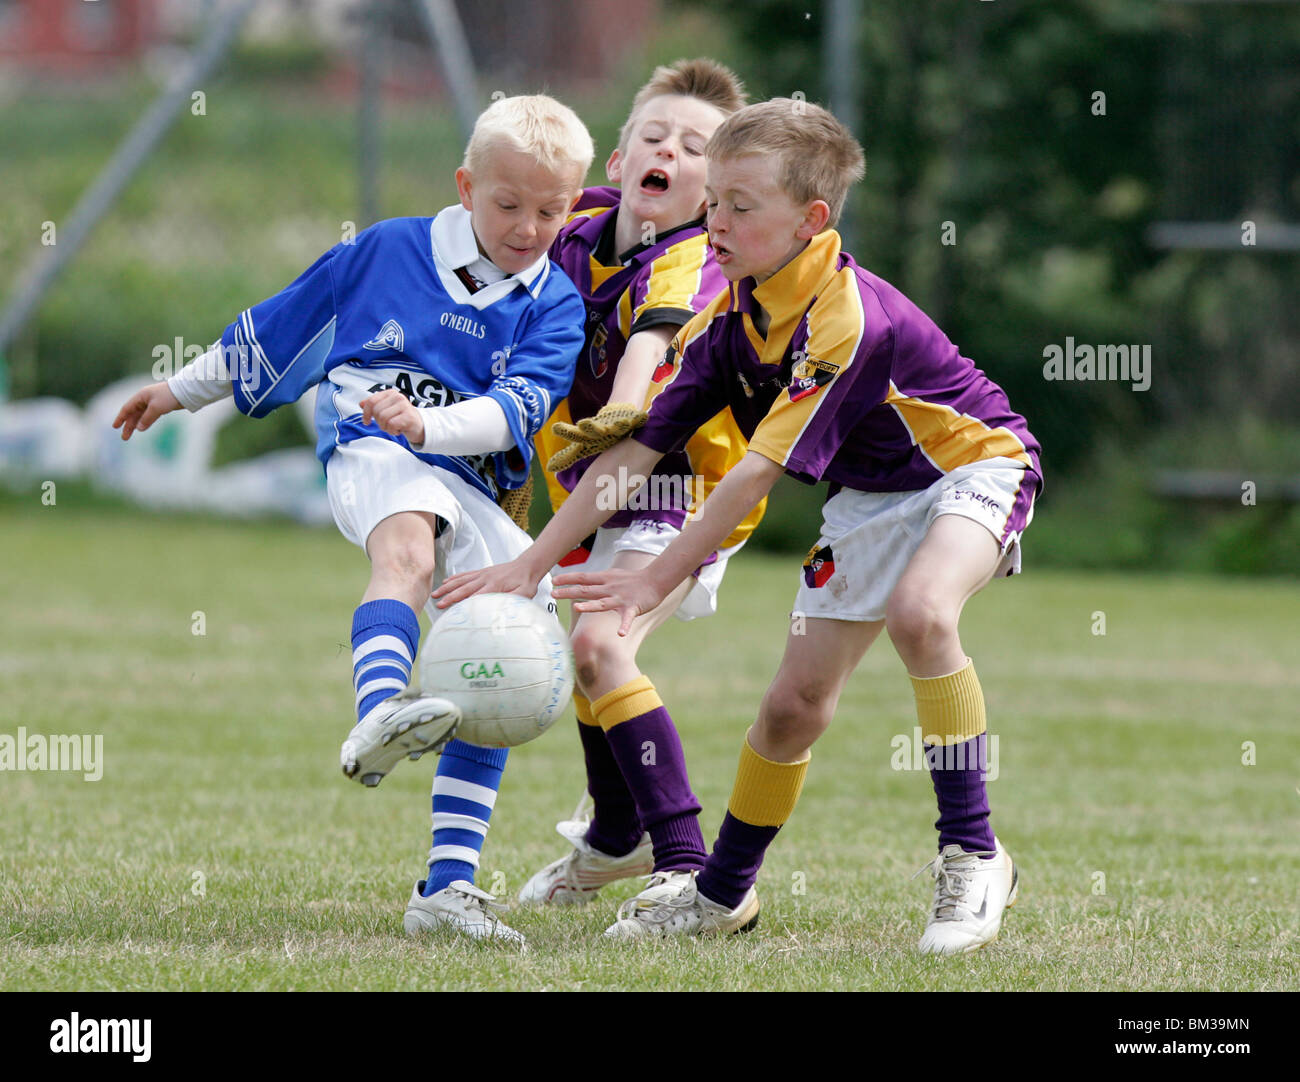 action from the belfast junior gaa schoolboys irish football tournament young boys playing gaelic football Stock Photo